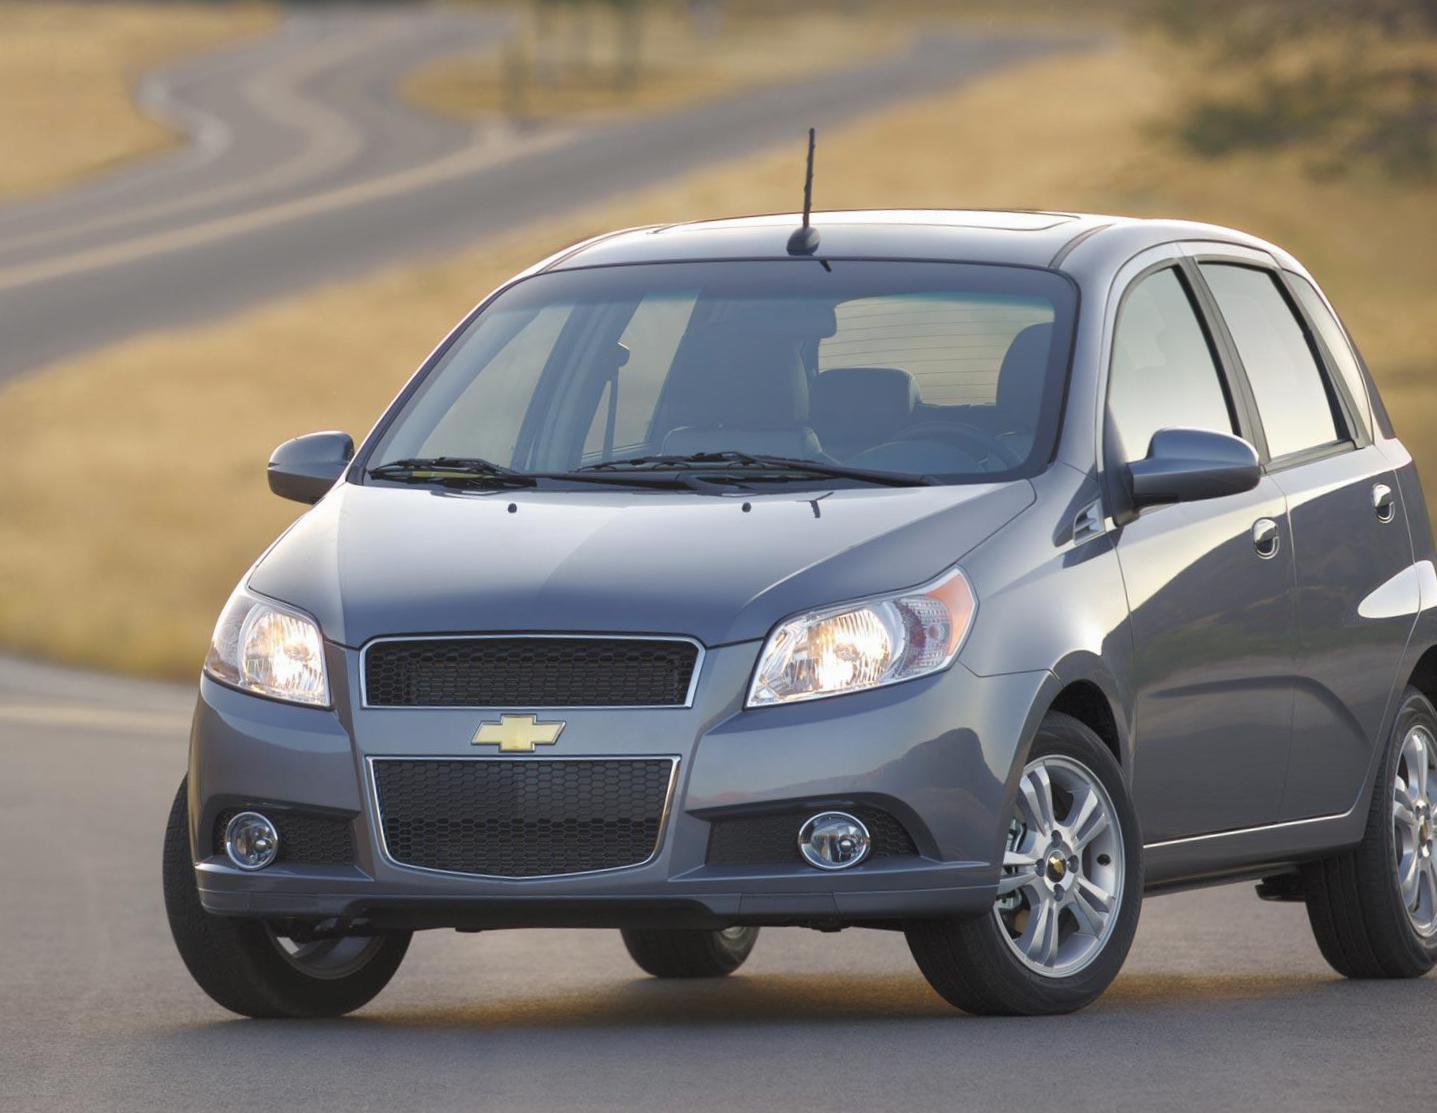 Chevrolet Aveo Hatchback review 2014